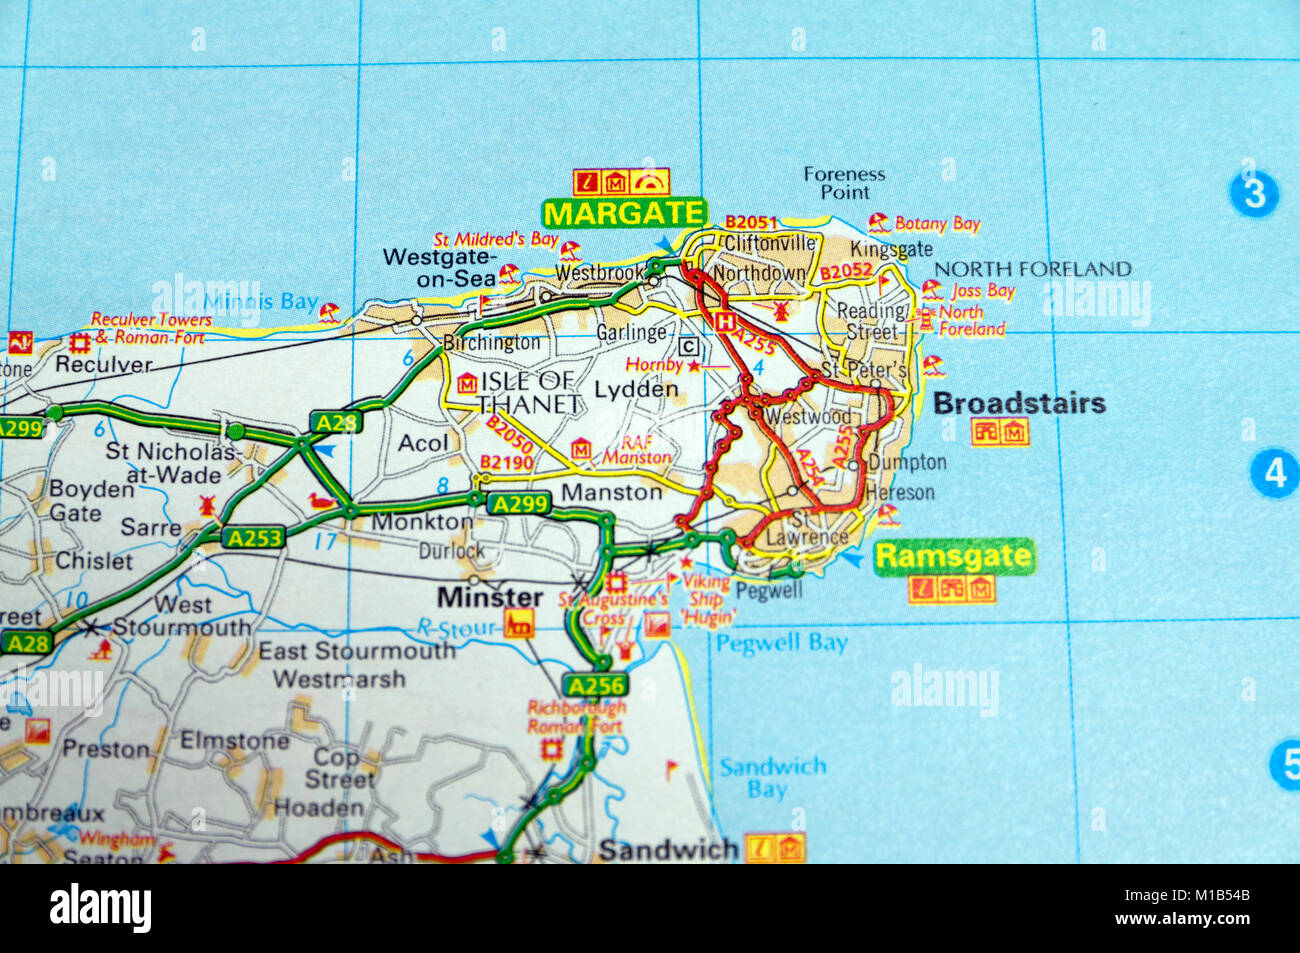 Mapa de carreteras de Margate, Inglaterra. Foto de stock